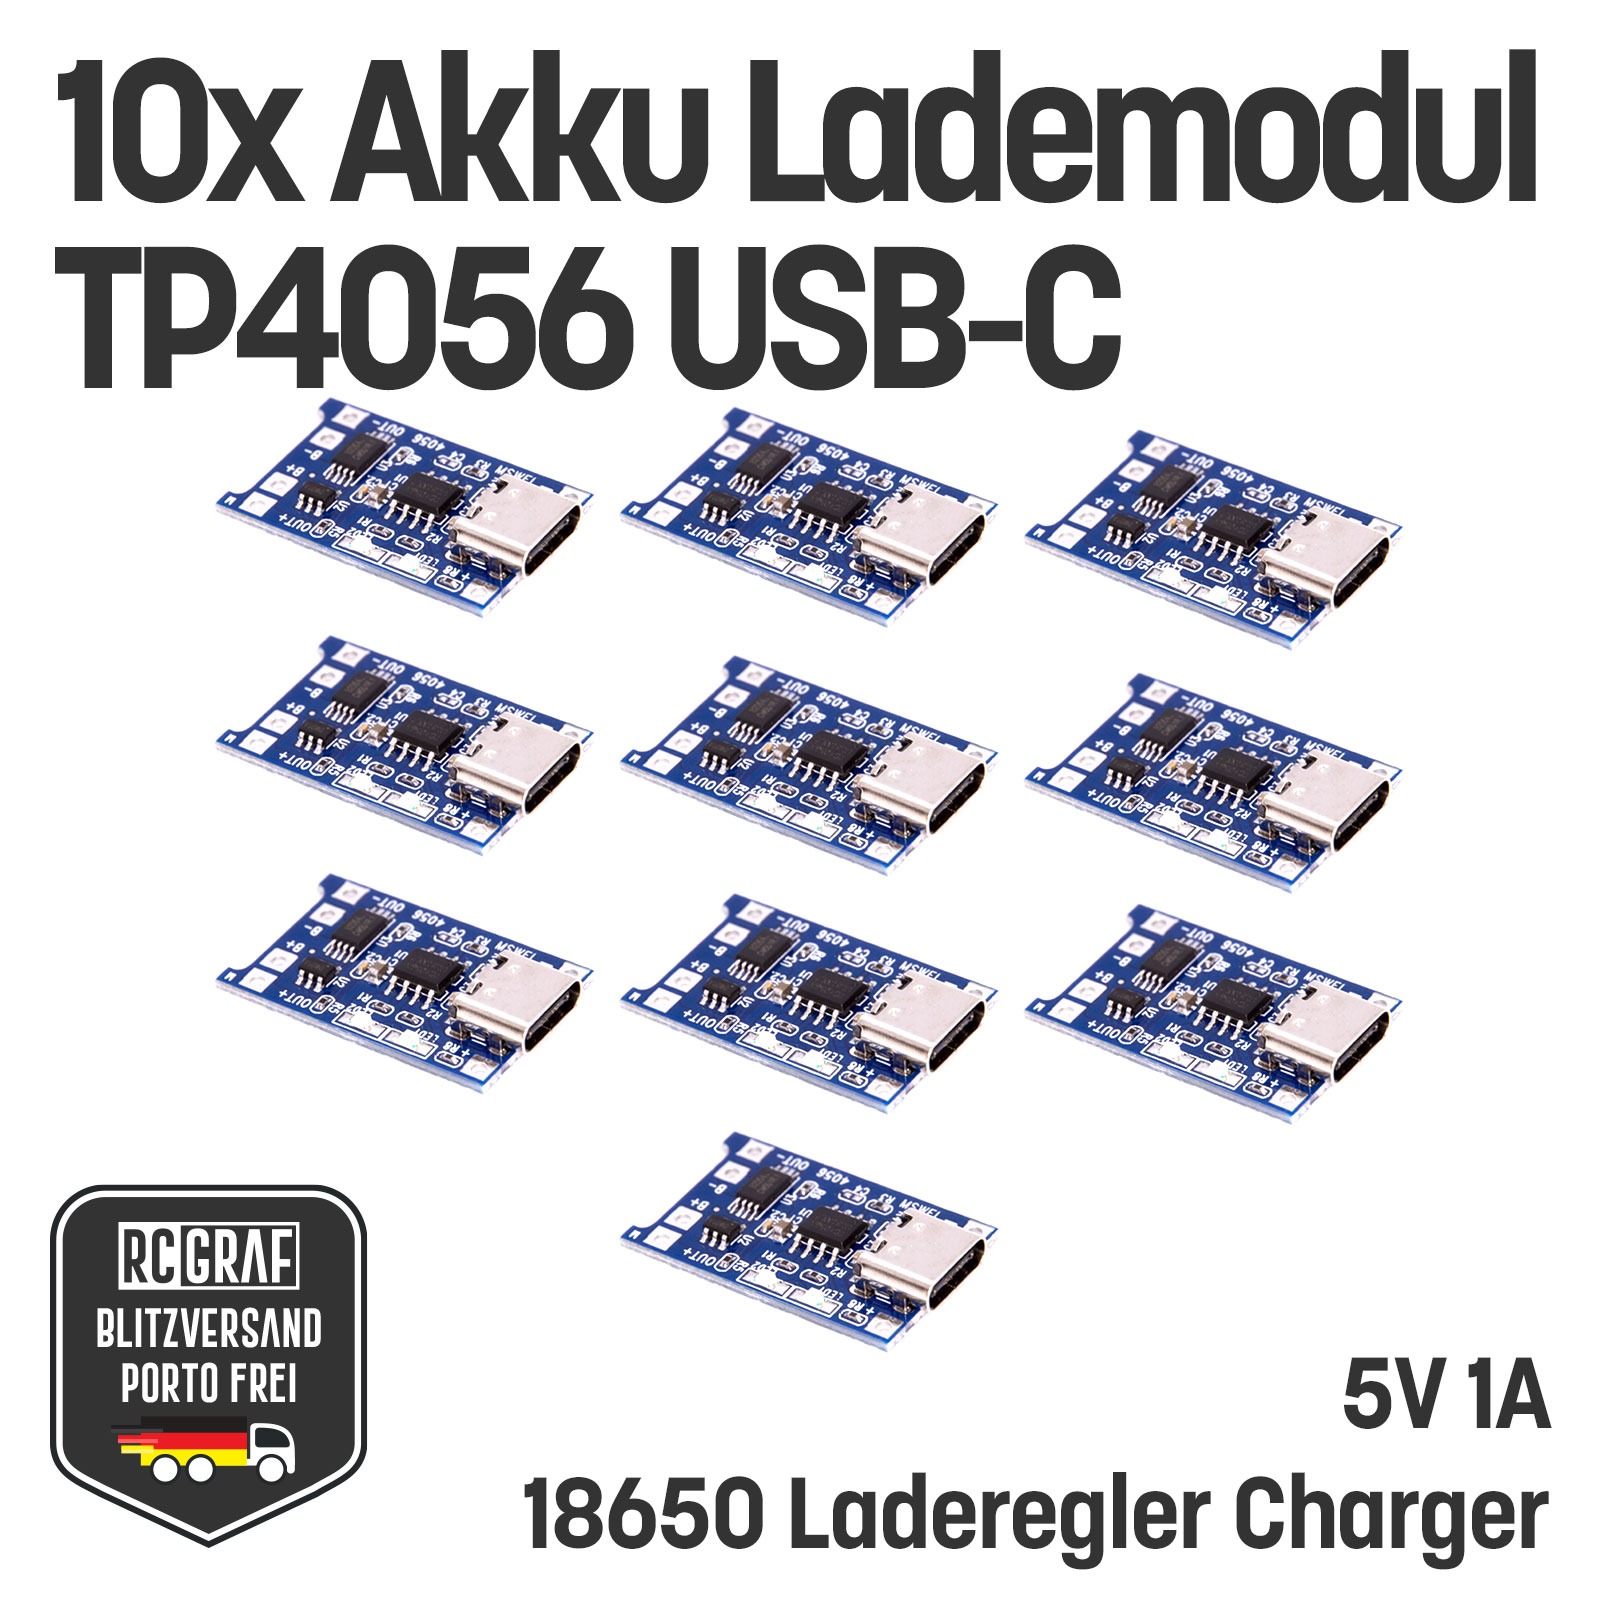 10x Akku Lademodul 5V 1A TP4056 USB C